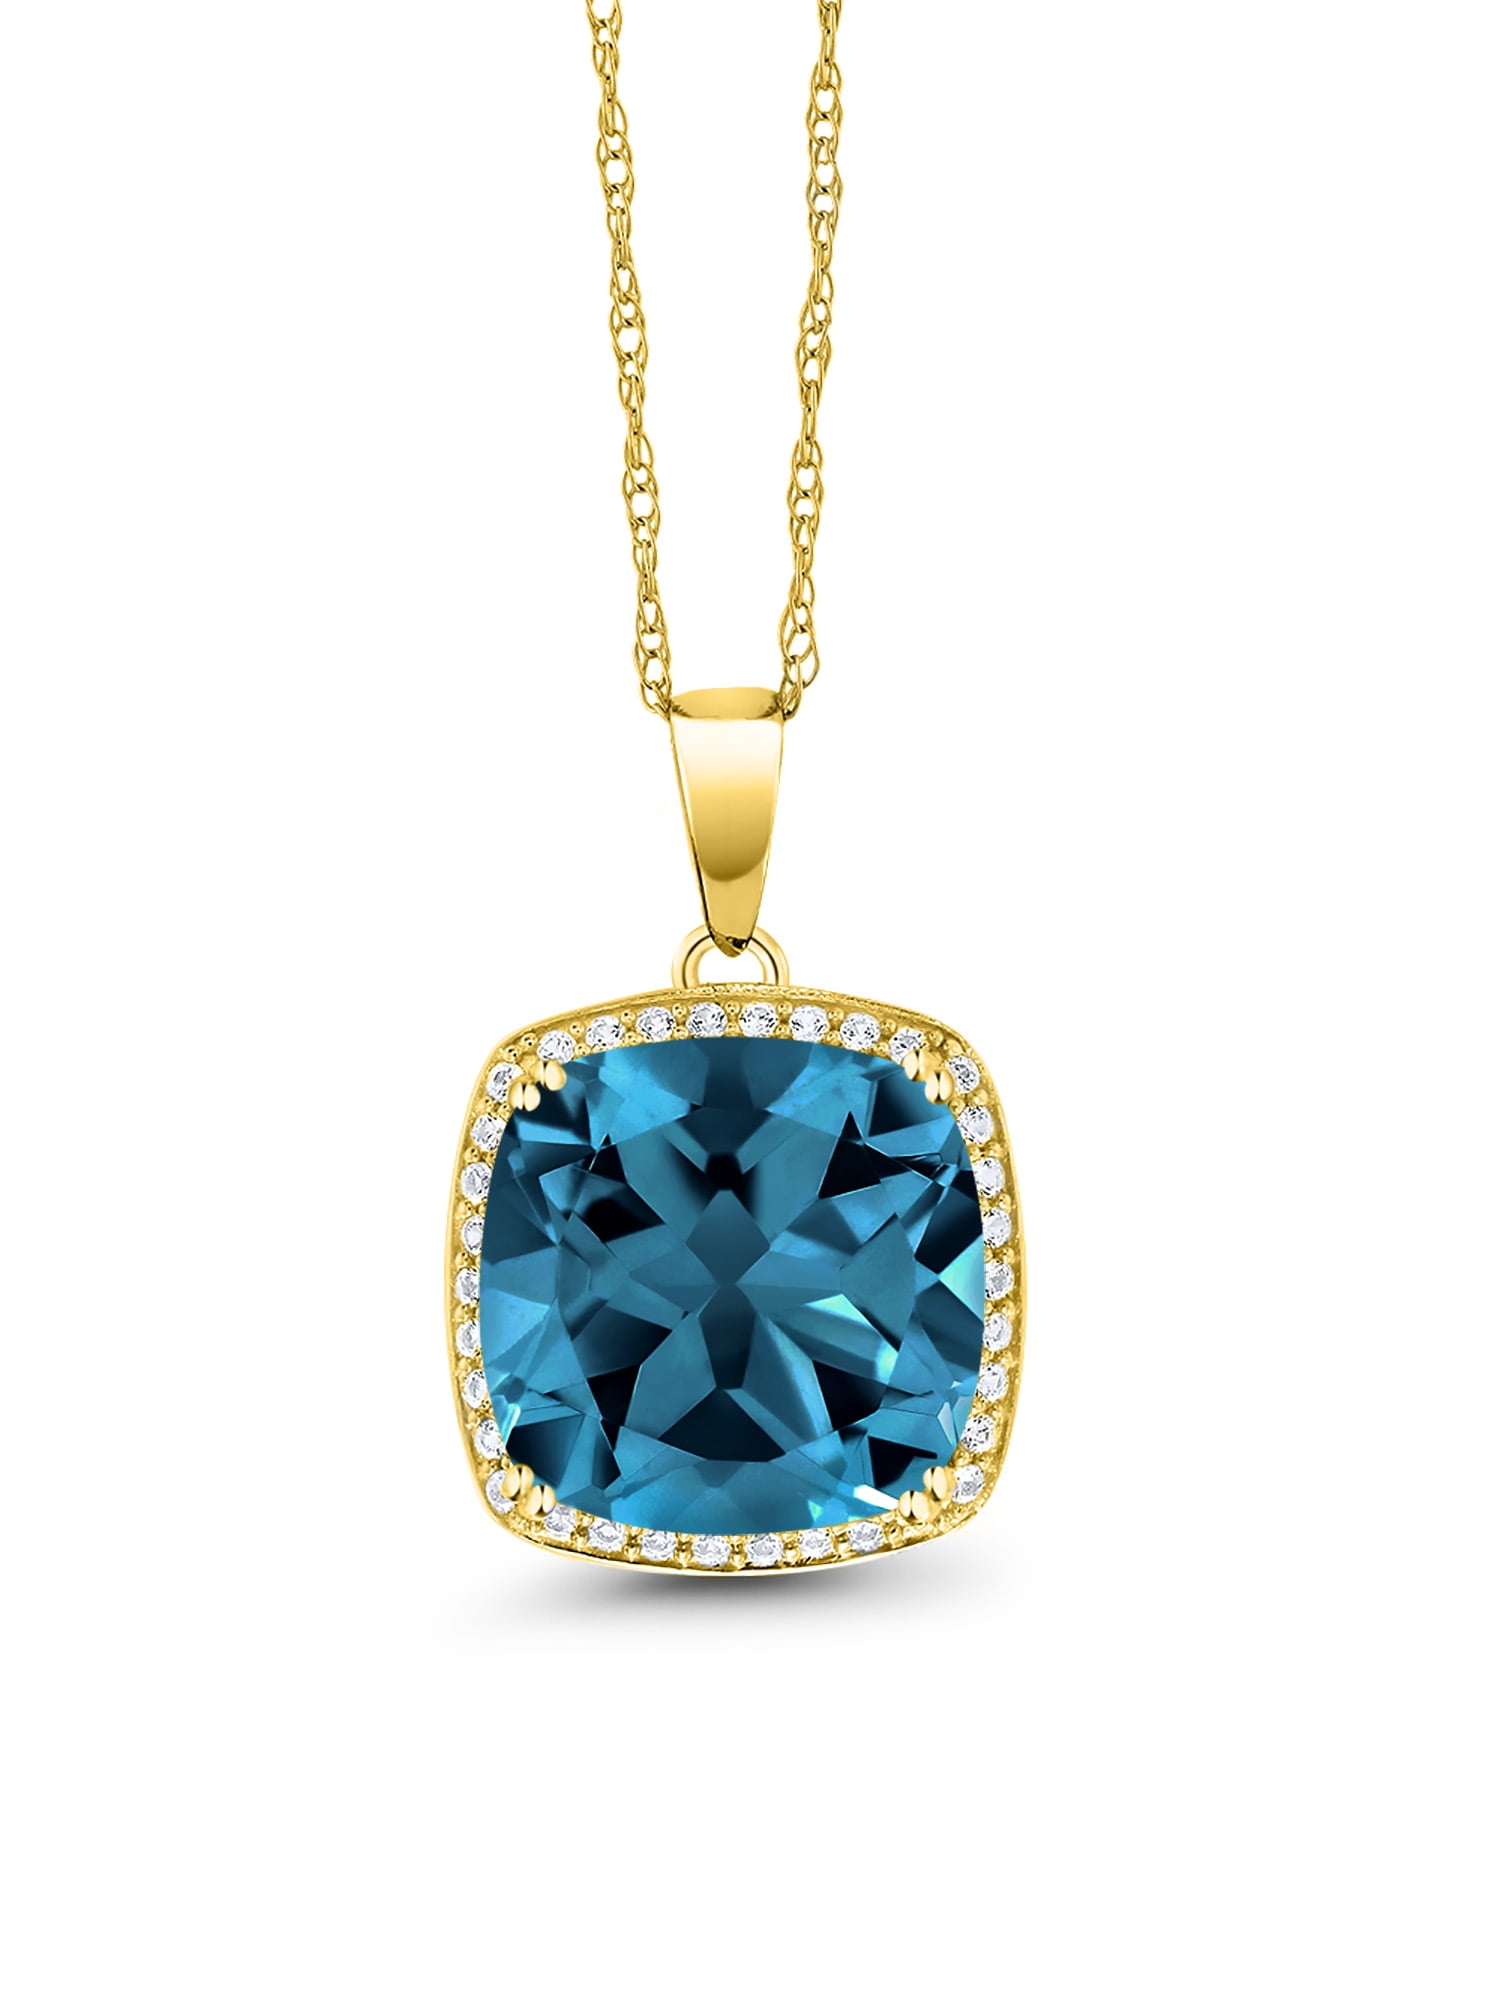 4.20Ct Emerald Cut Amethyst & Diamonds Pendant 14K Yellow Gold Finish Necklace